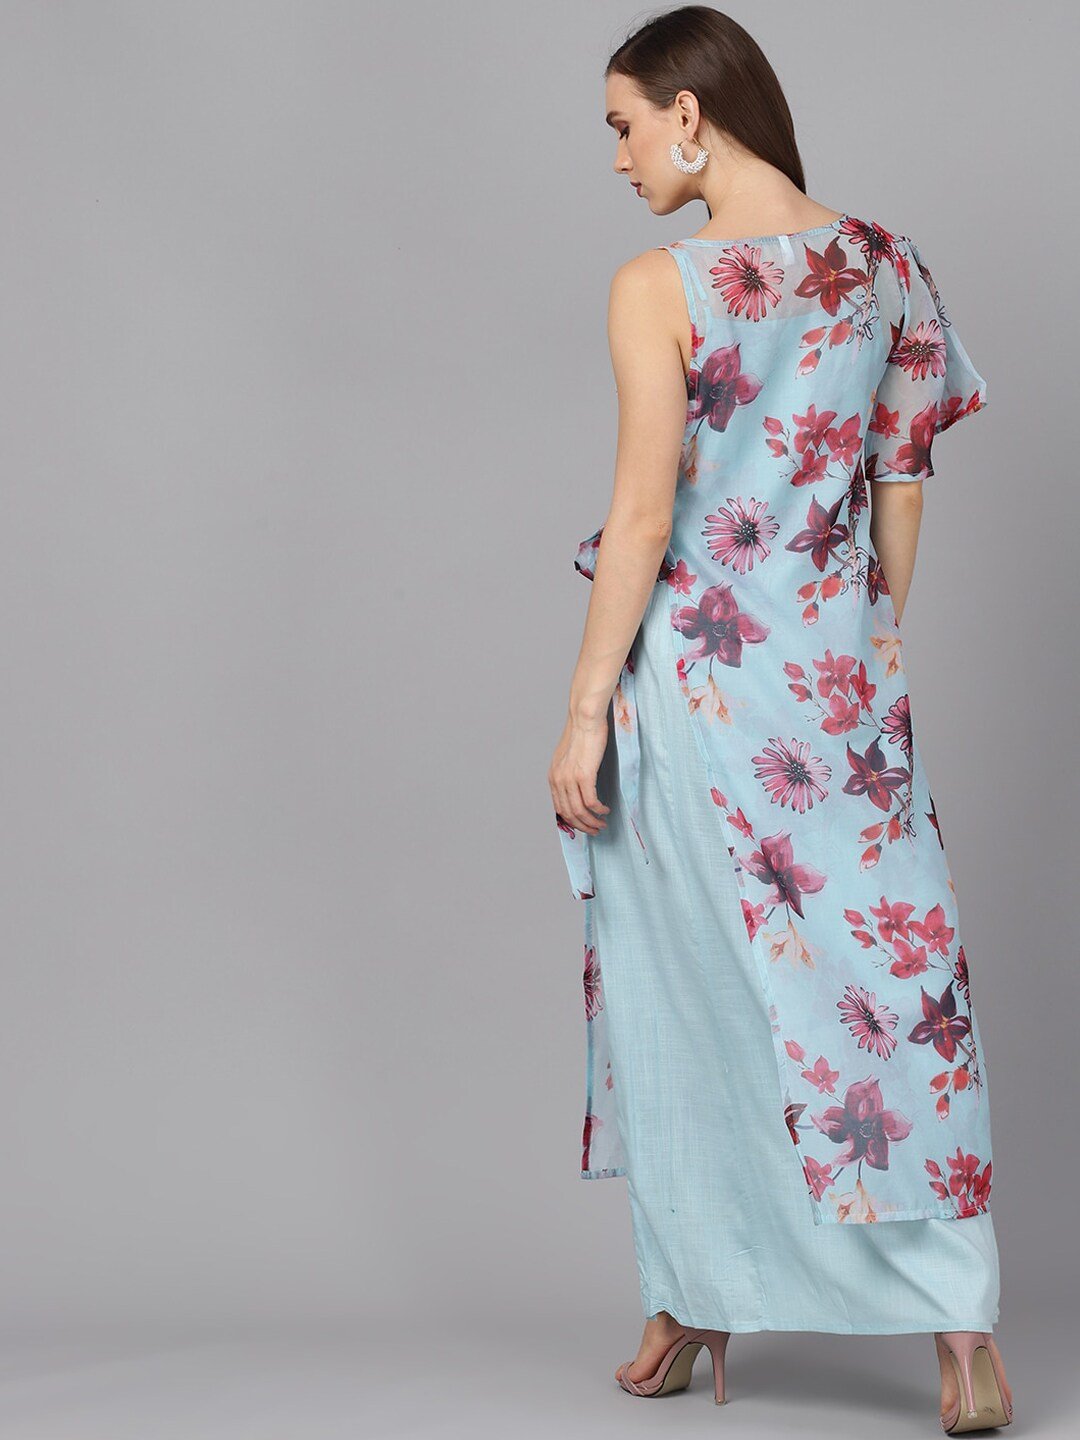 Women's  Blue & Pink Printed Layered Maxi Dress - AKS